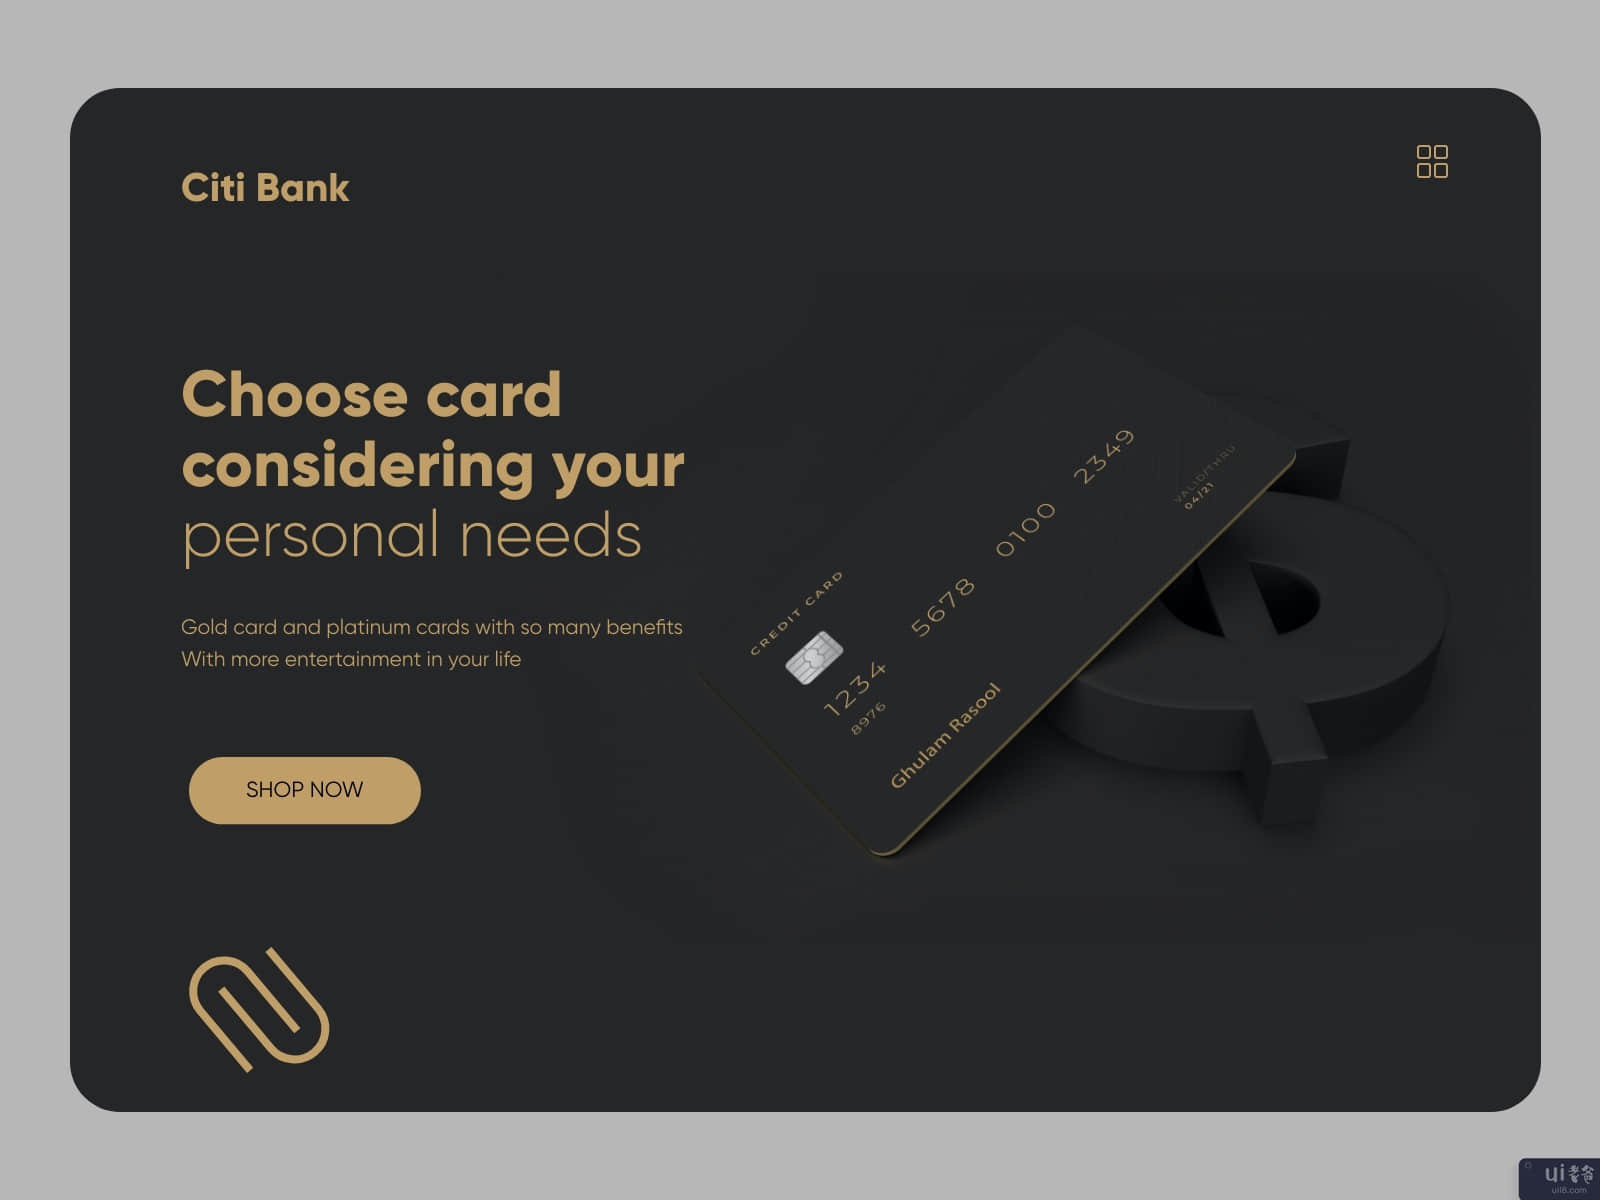 卡银行登陆页设计(Card Bank Landing Page Design)插图